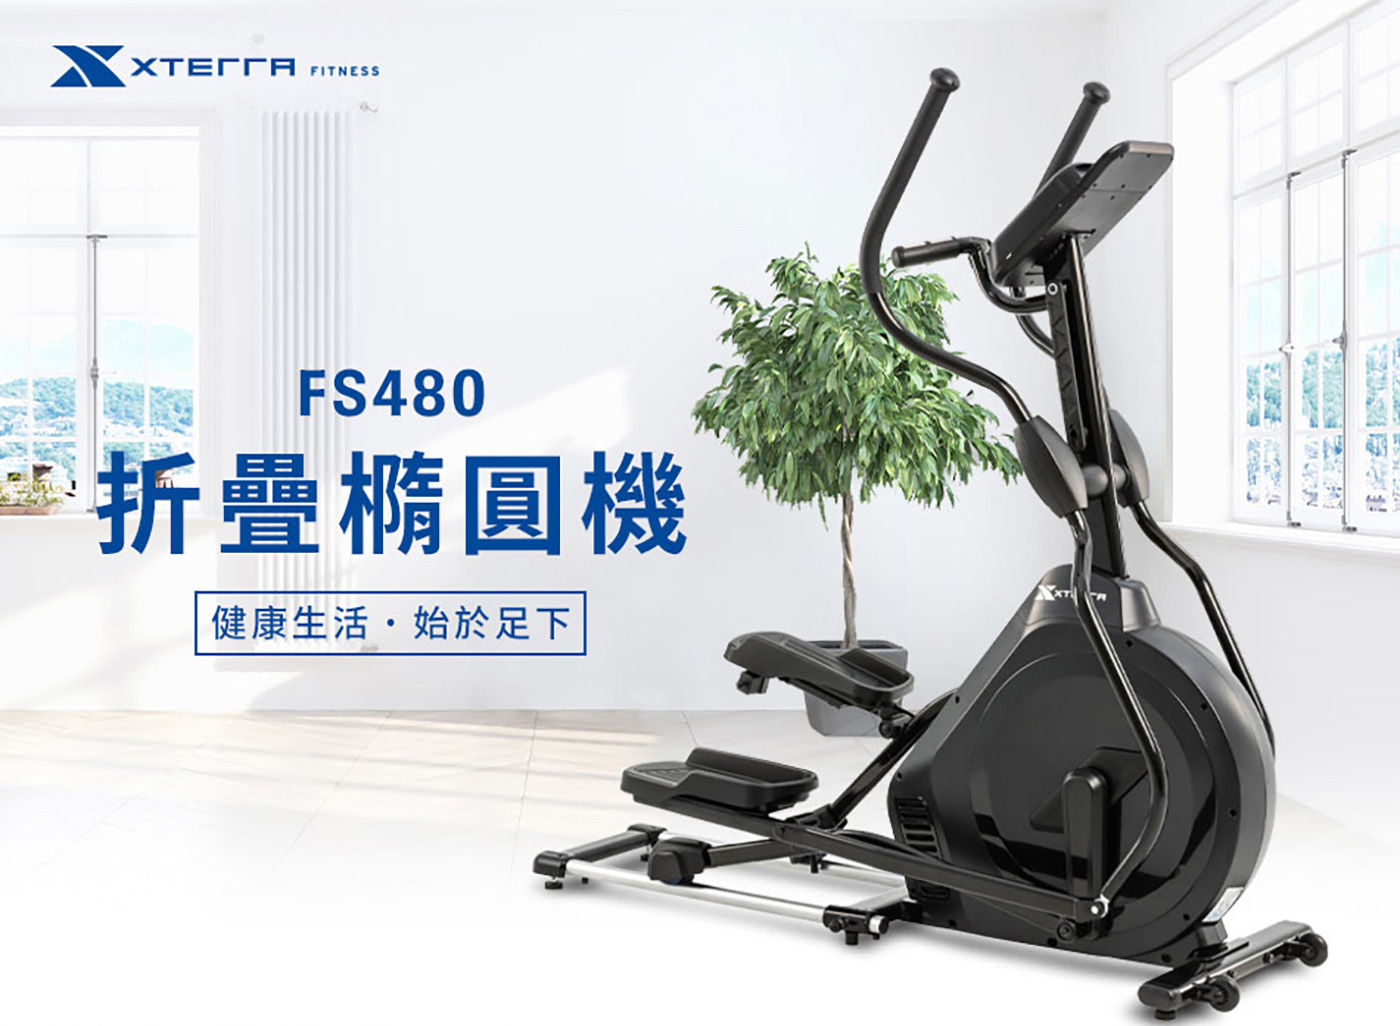 XTERRA FS480 摺疊橢圓機健康生活始於足下，居家健身器材保持運動好習慣